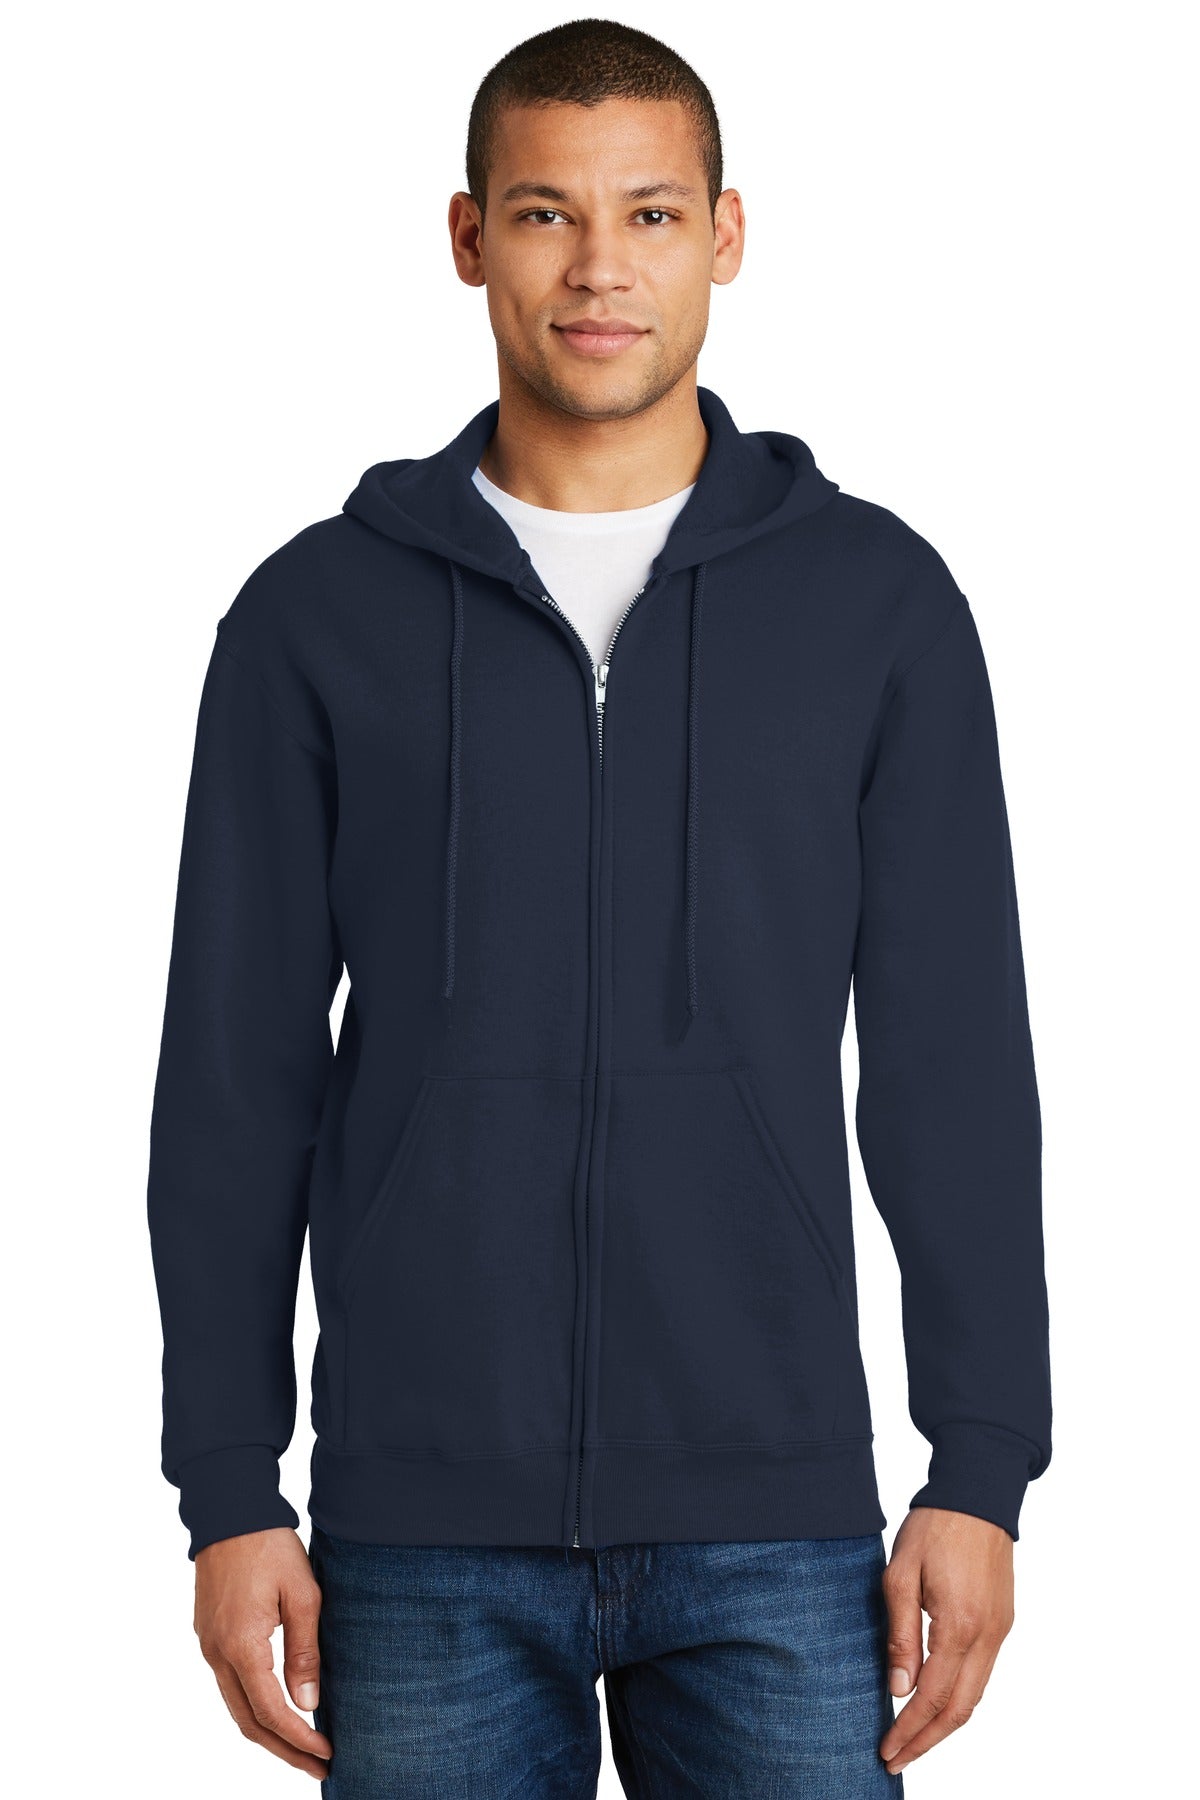 JERZEES® - NuBlend® Full-Zip Hooded Sweatshirt. 993M - DFW Impression